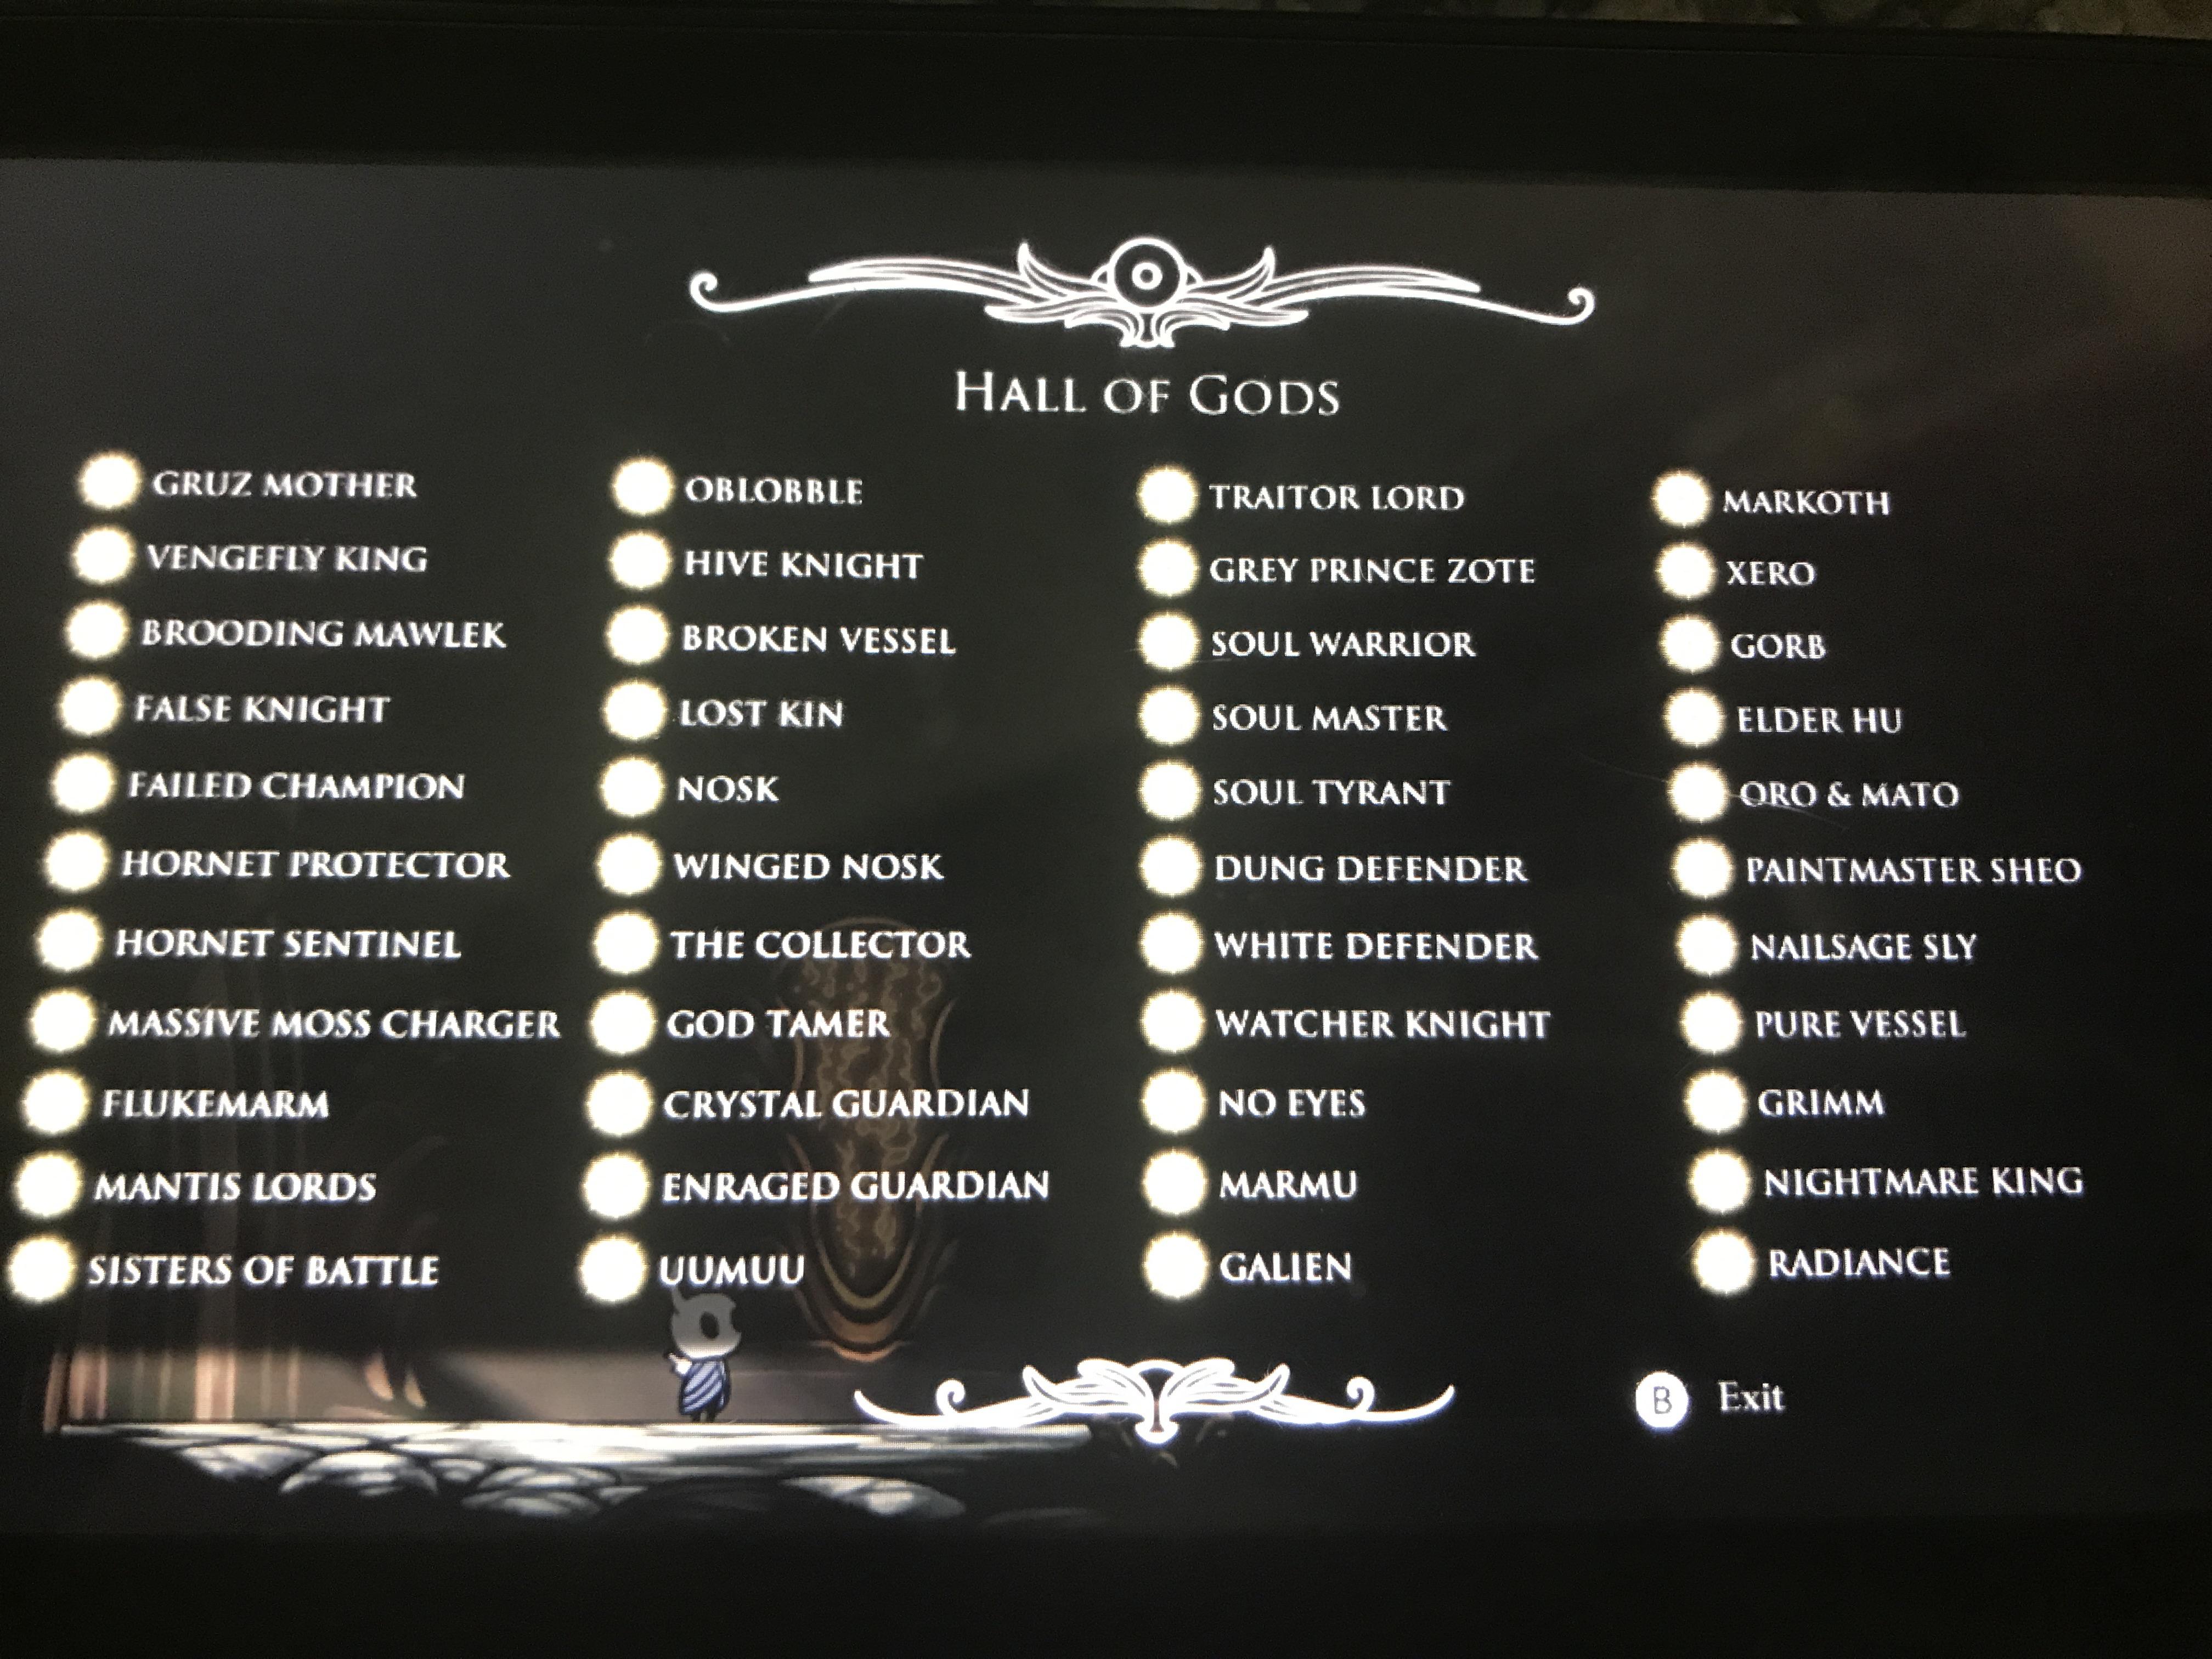 Hall of gods complete list